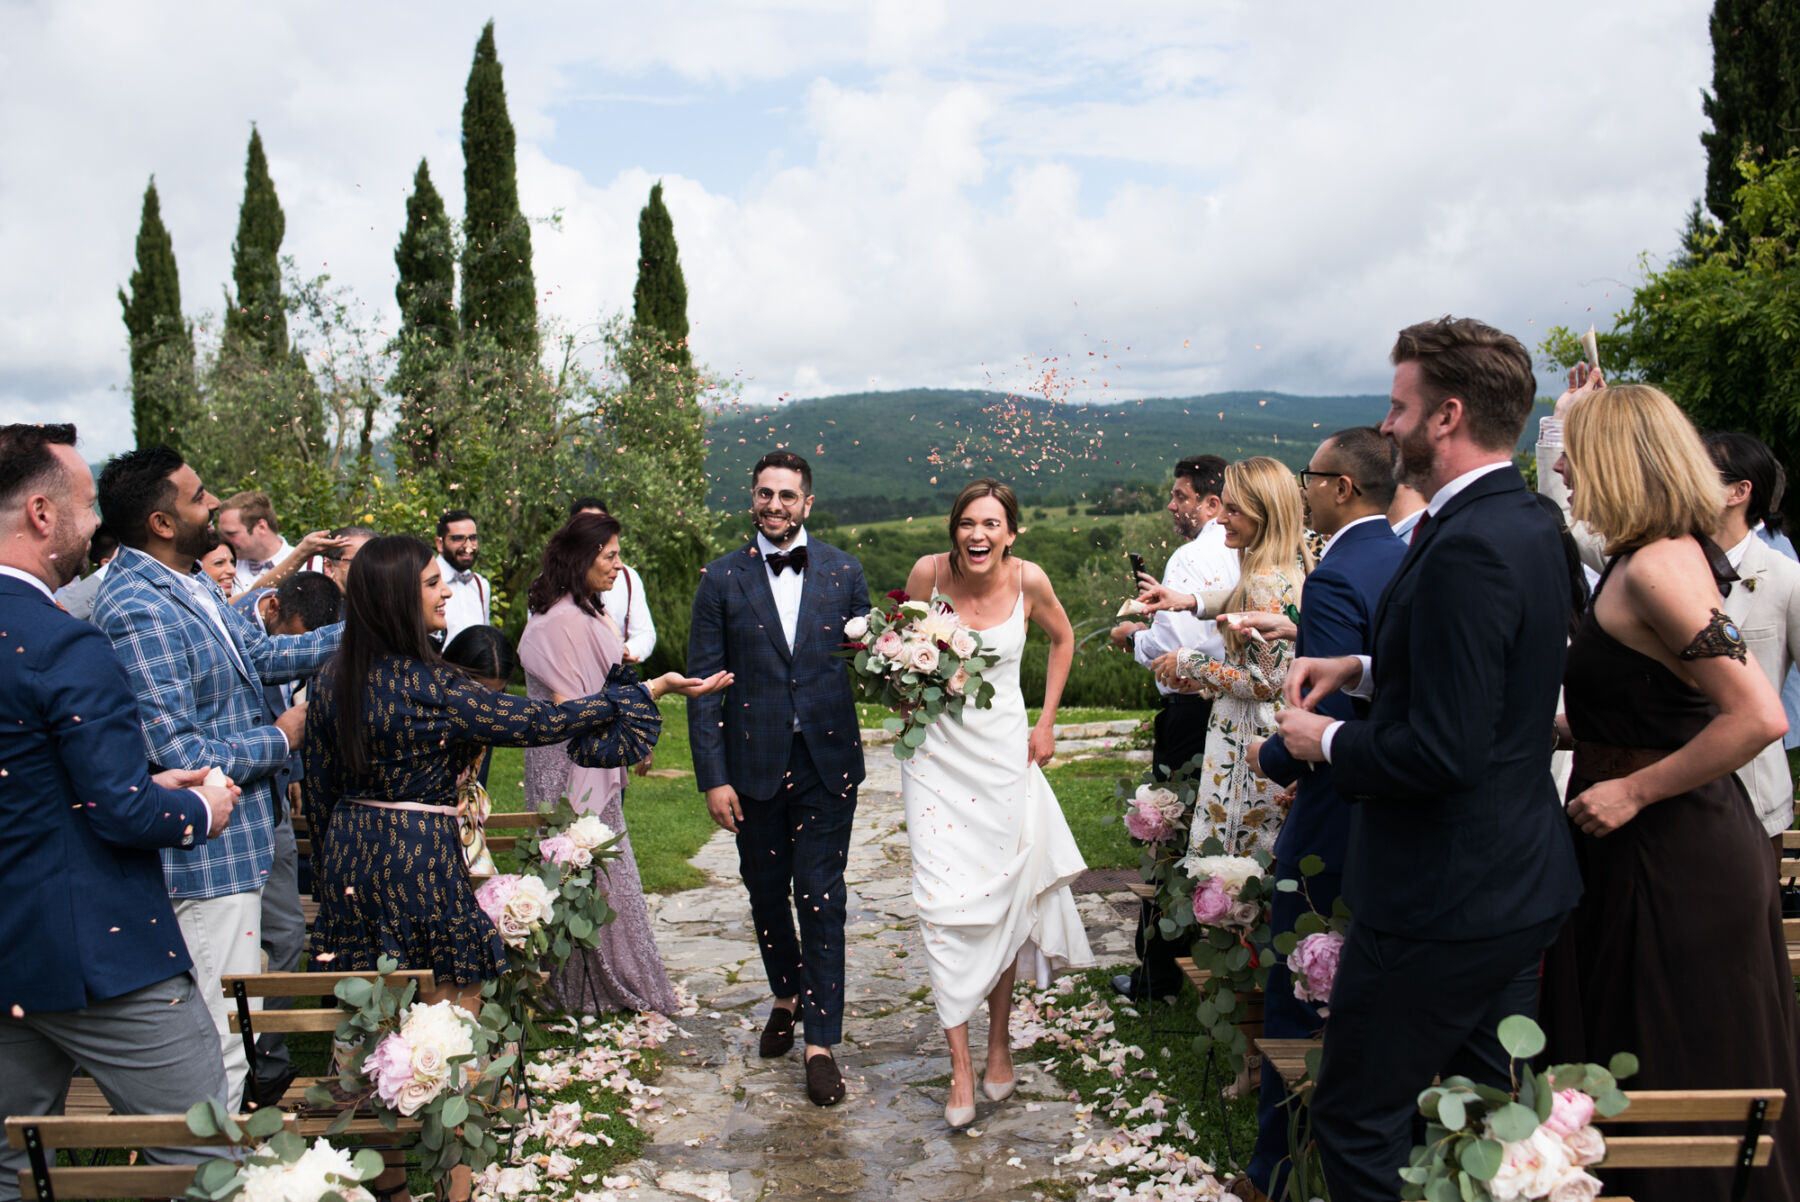 Tuscany wedding confetti shot